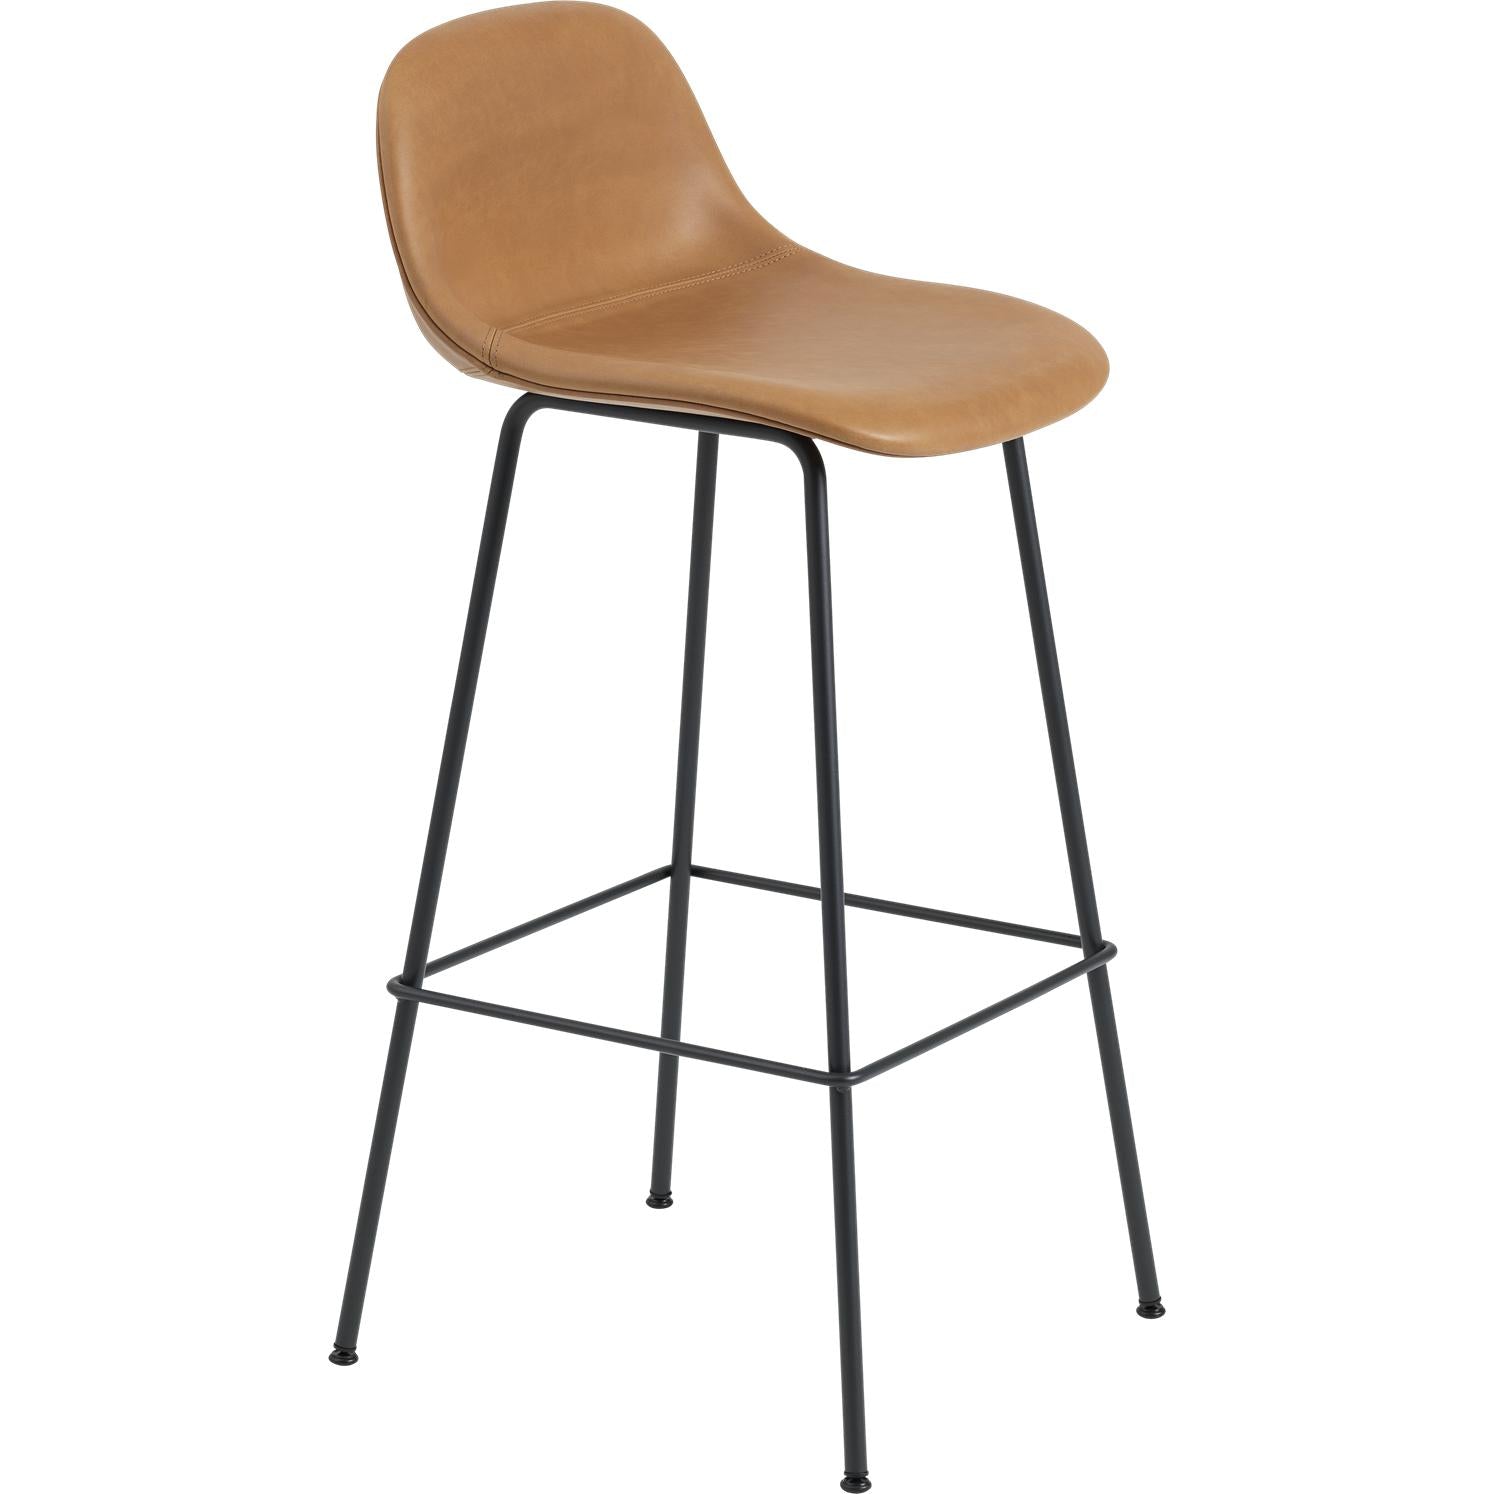 Muuto Fiber Bar Stuhl mit Basis der Rückenlehne, Faser-/Ledersitz, braunes Cognac -Leder